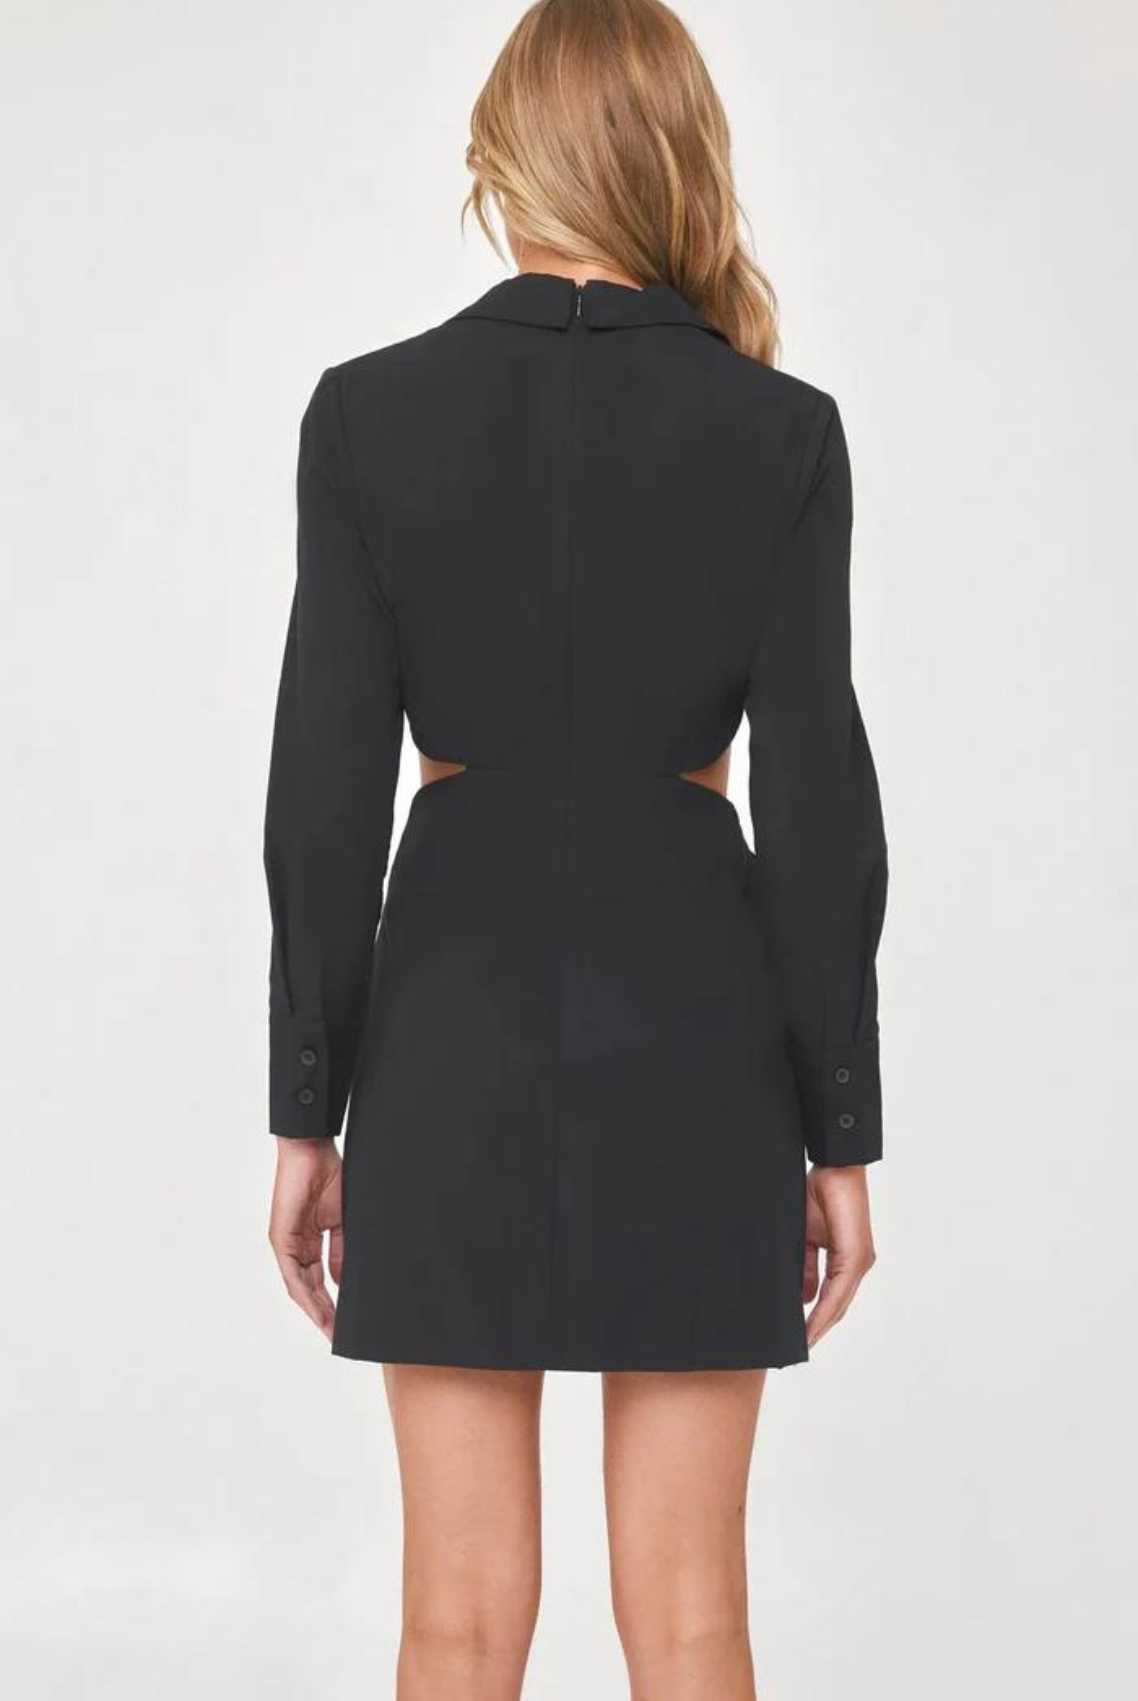 VALENCIA SHIRT DRESS | BLACK WINNIE & CO